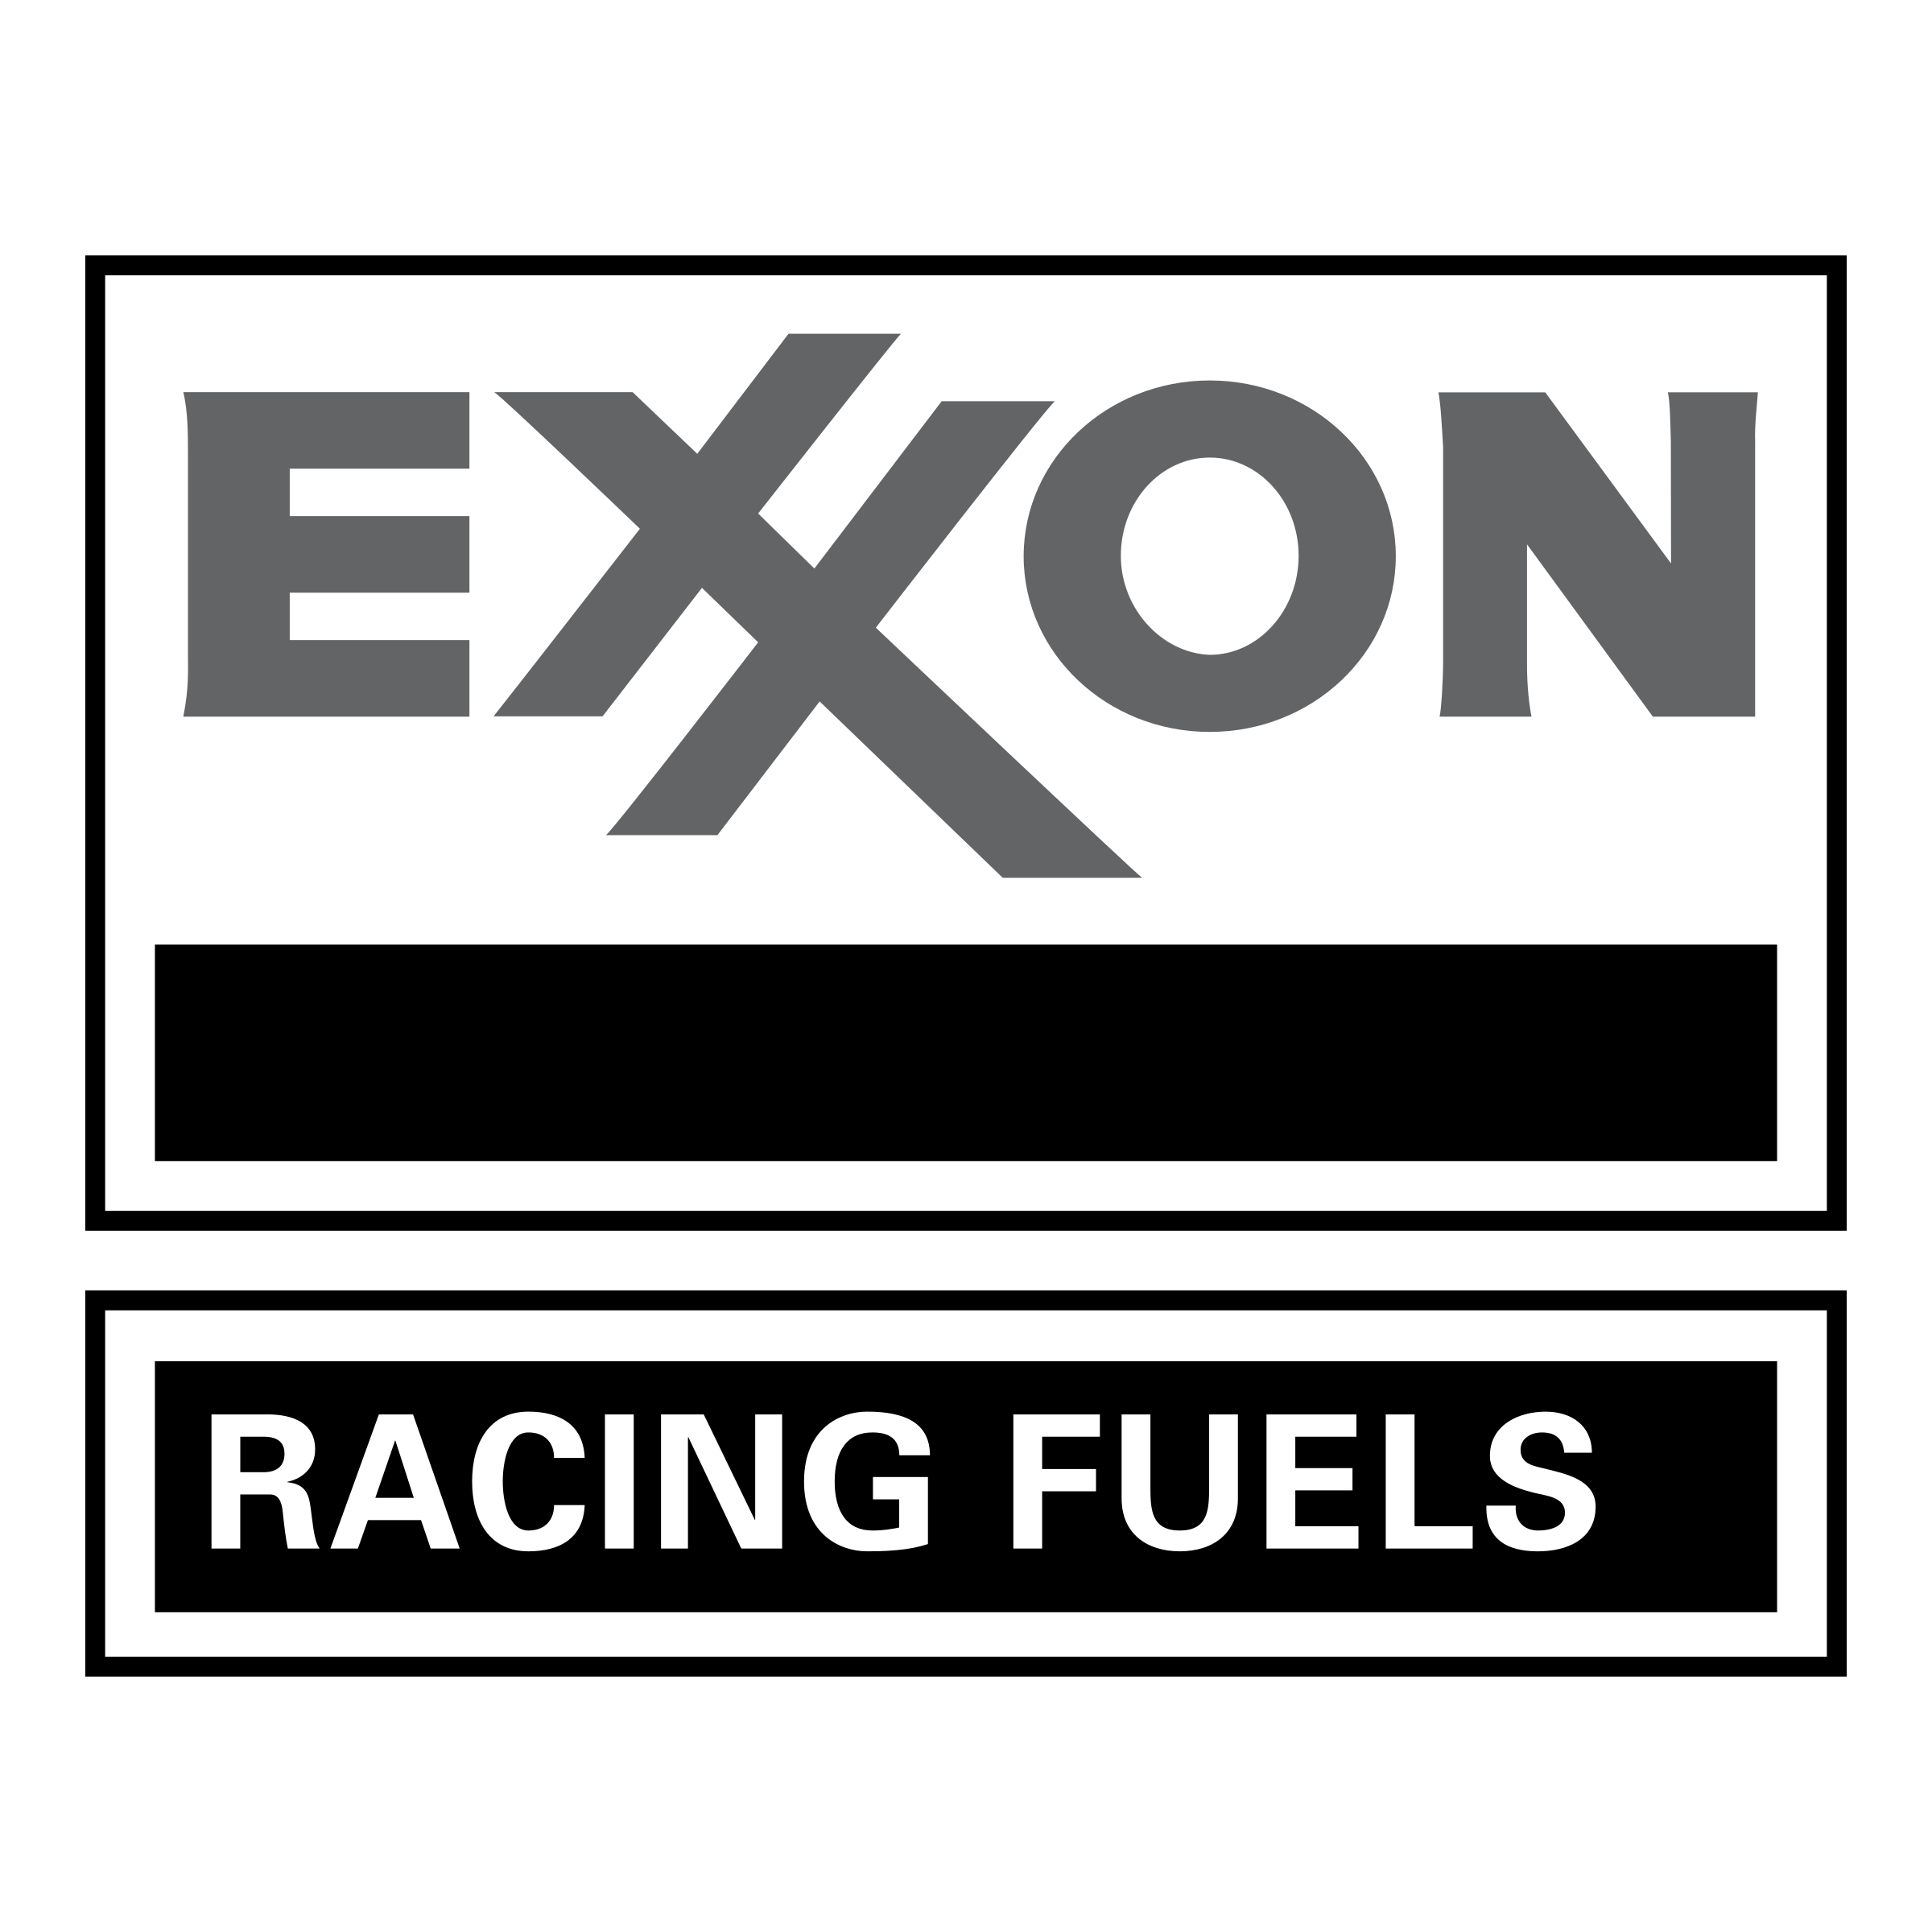 Exxon Logo - Exxon Logo PNG Transparent & SVG Vector - Freebie Supply